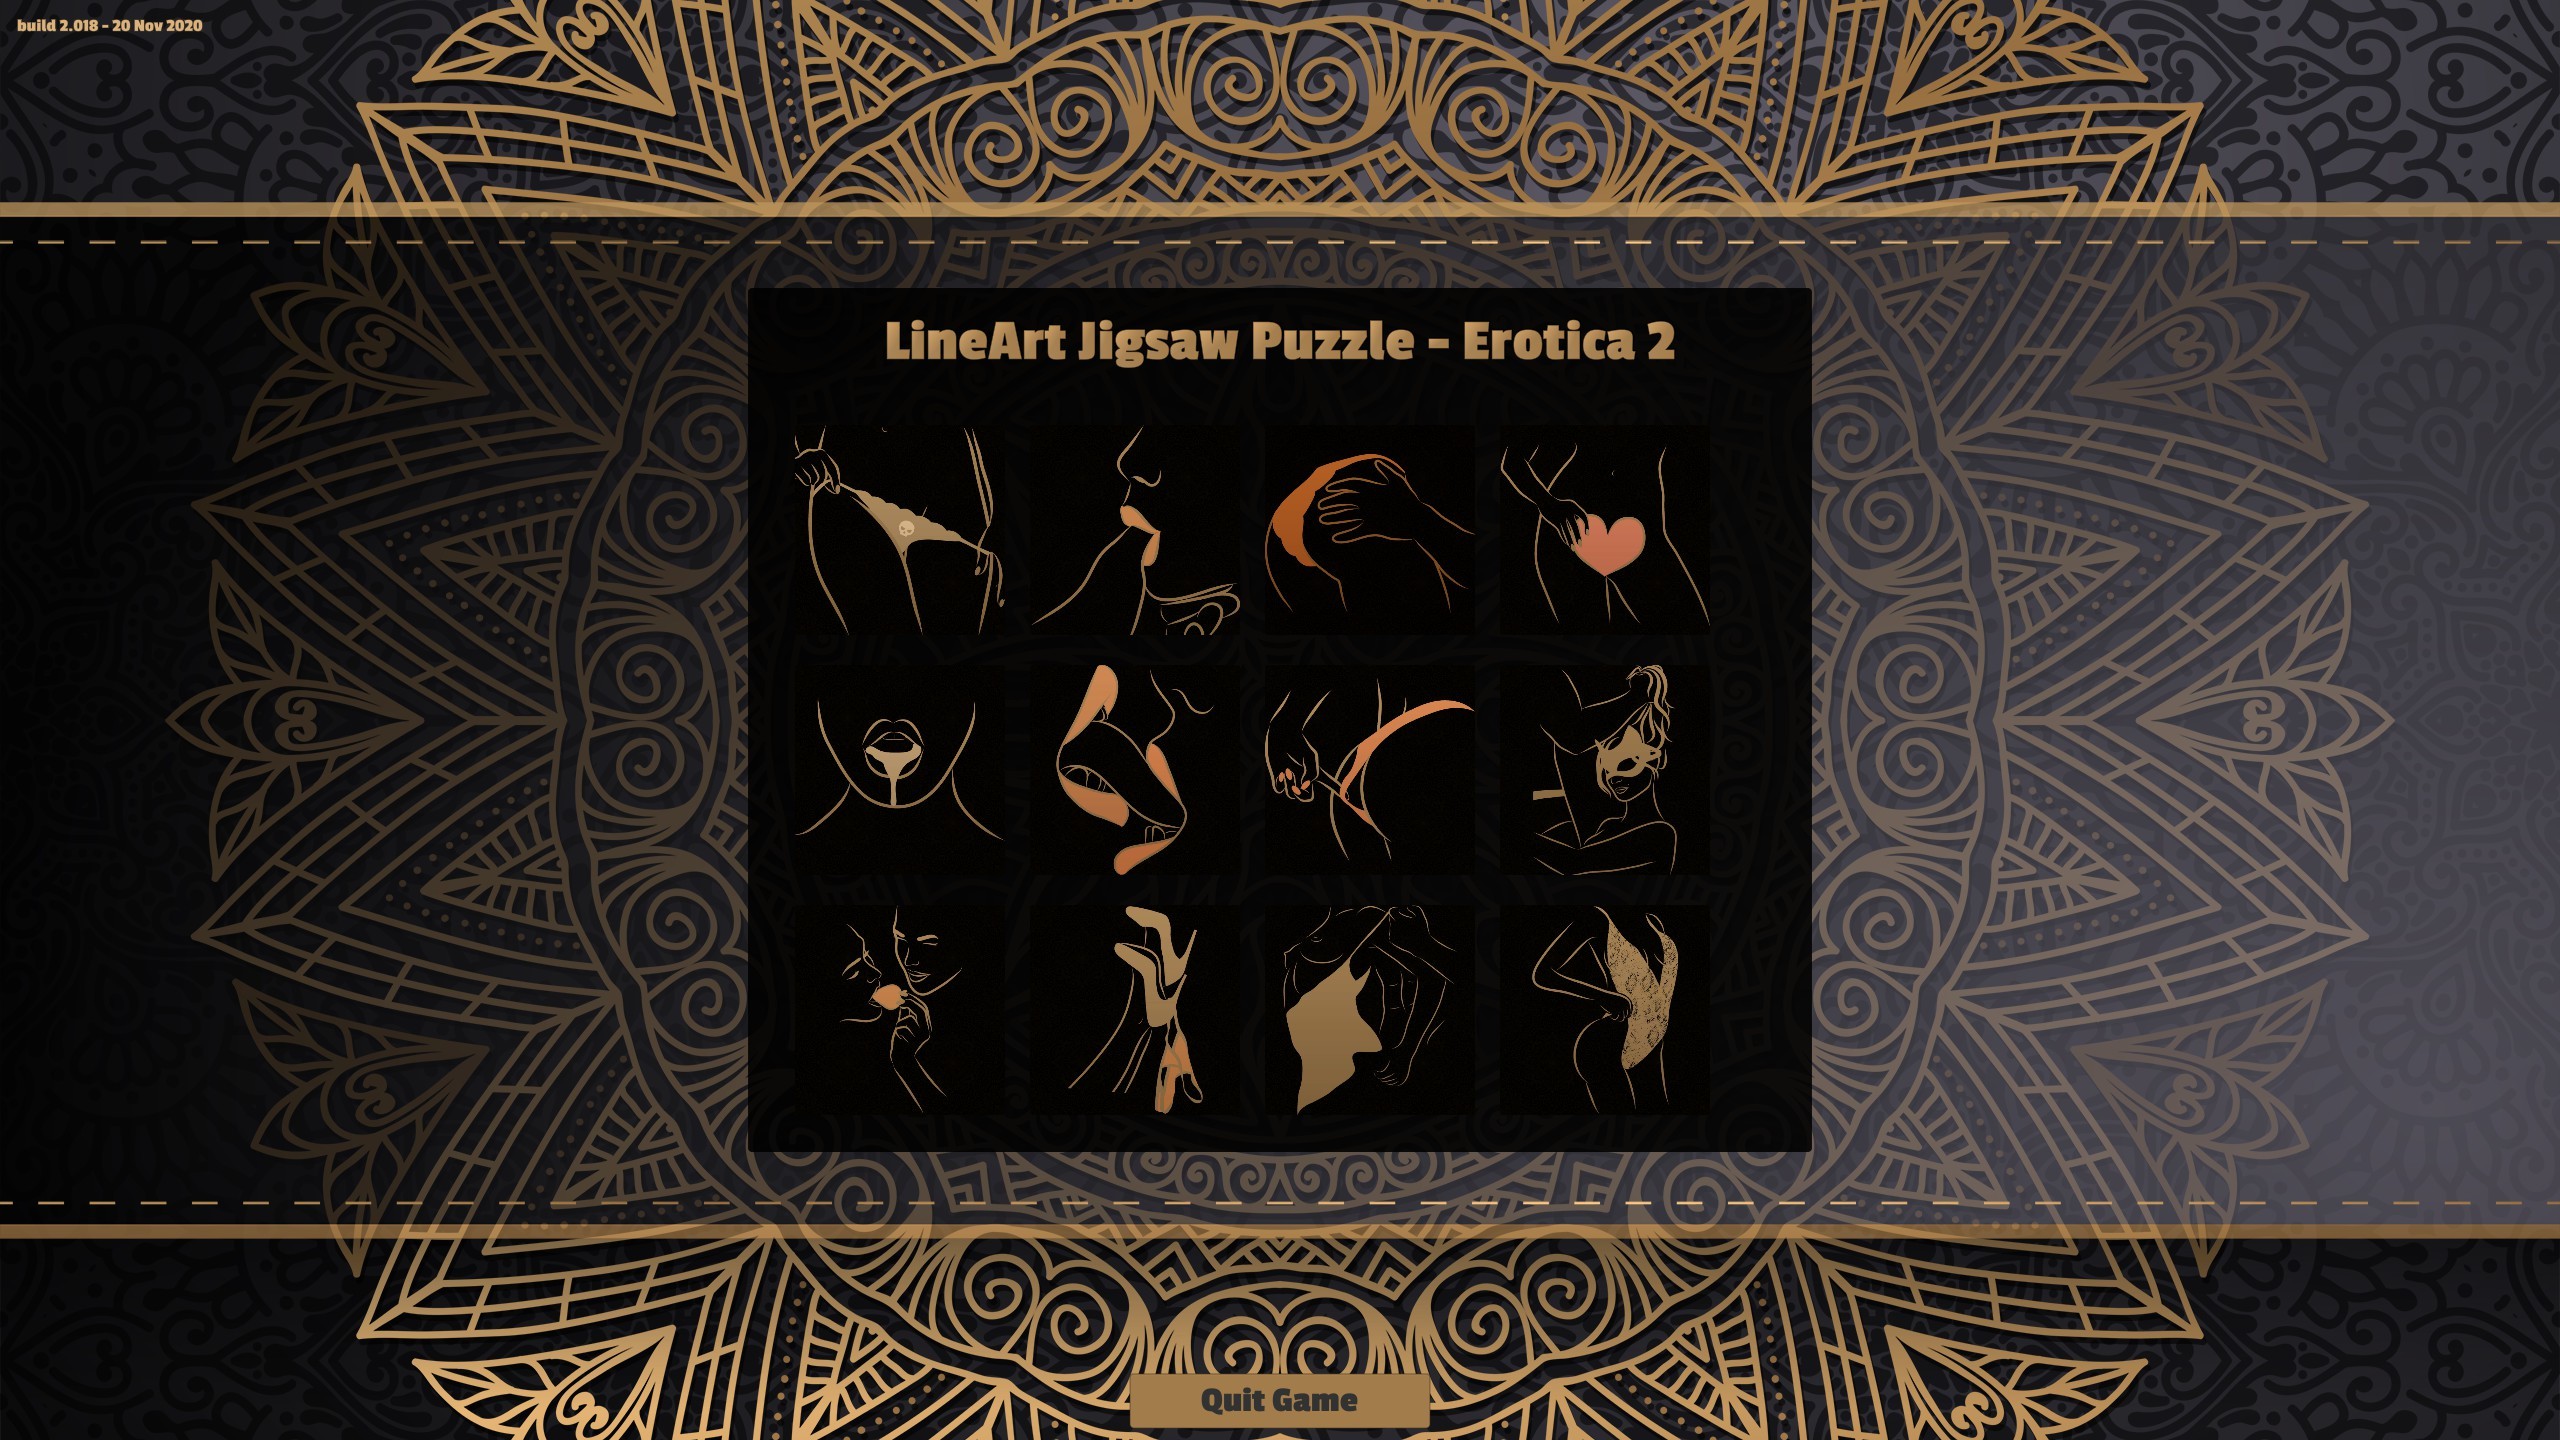 LineArt Jigsaw Puzzle - Erotica 2 Steam CD Key 0.21 usd